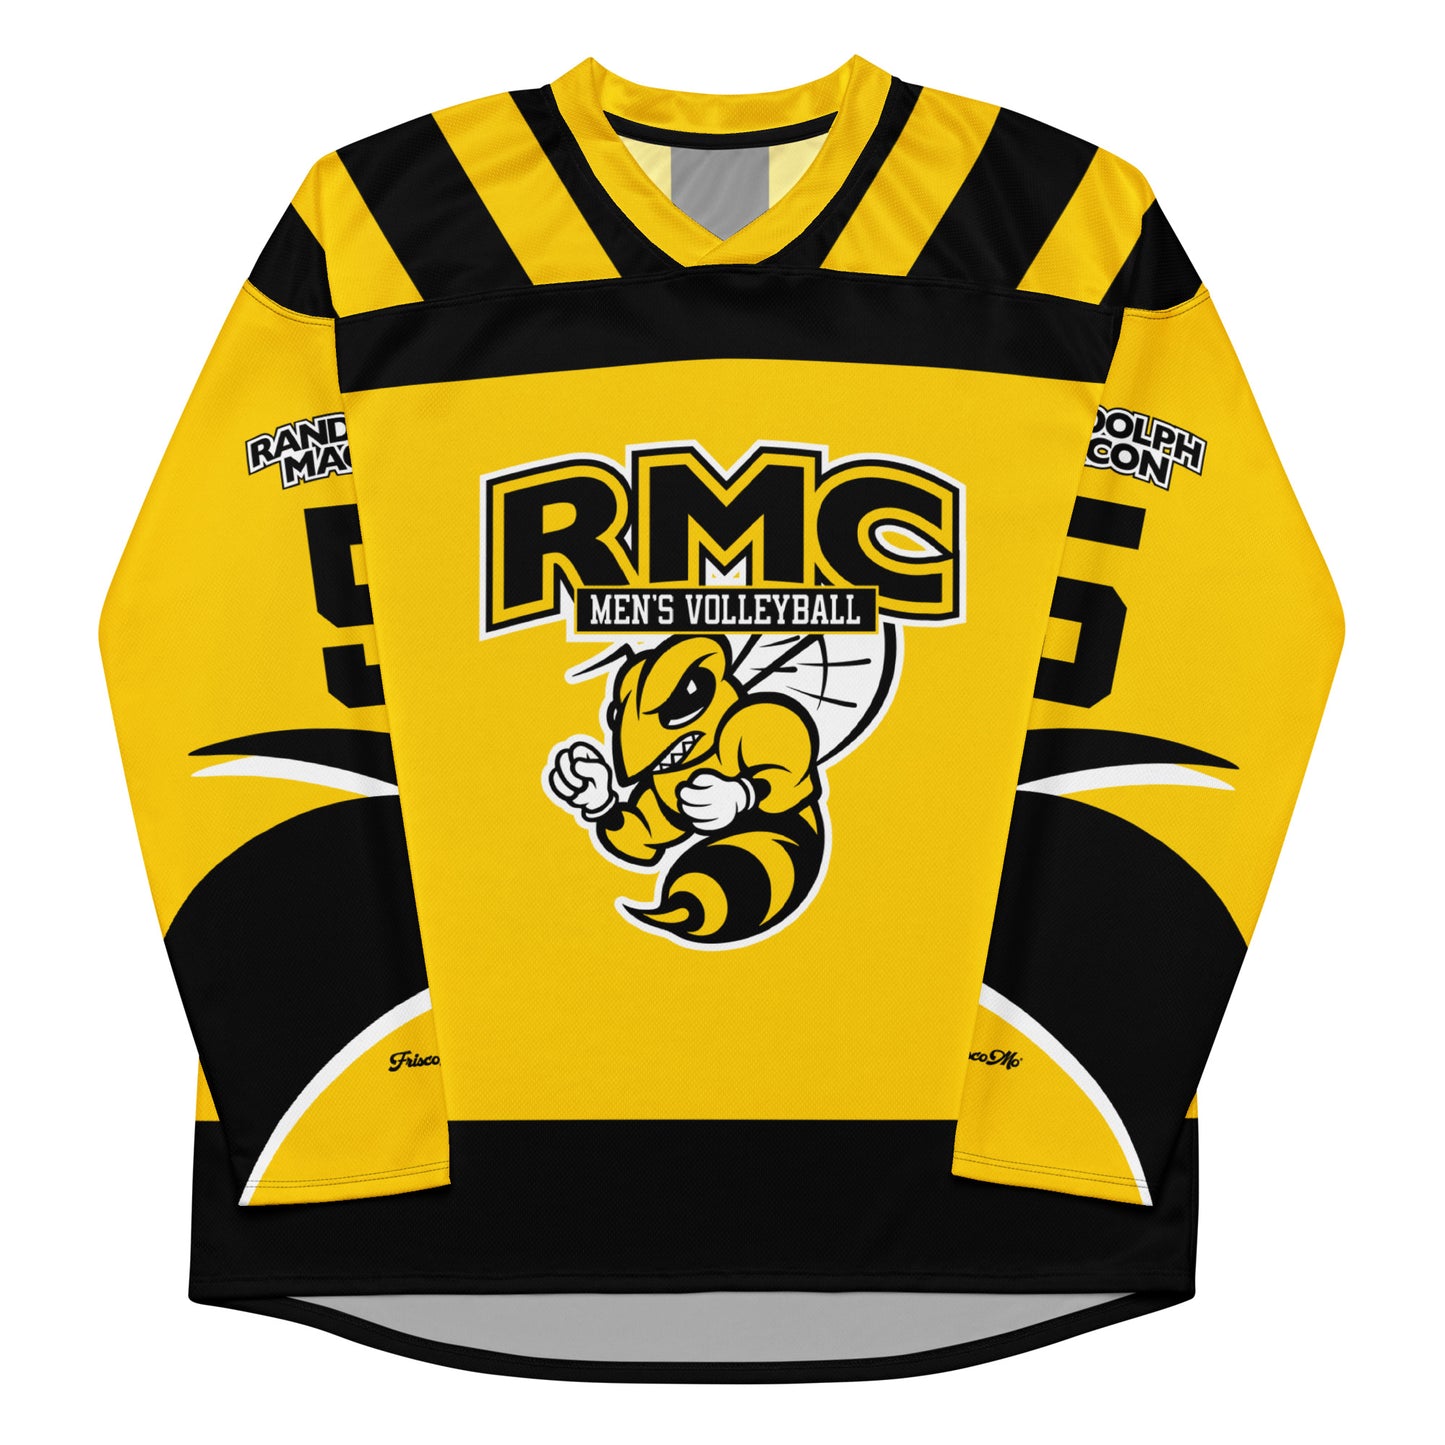 RMC MVB Hockey Warm-Up